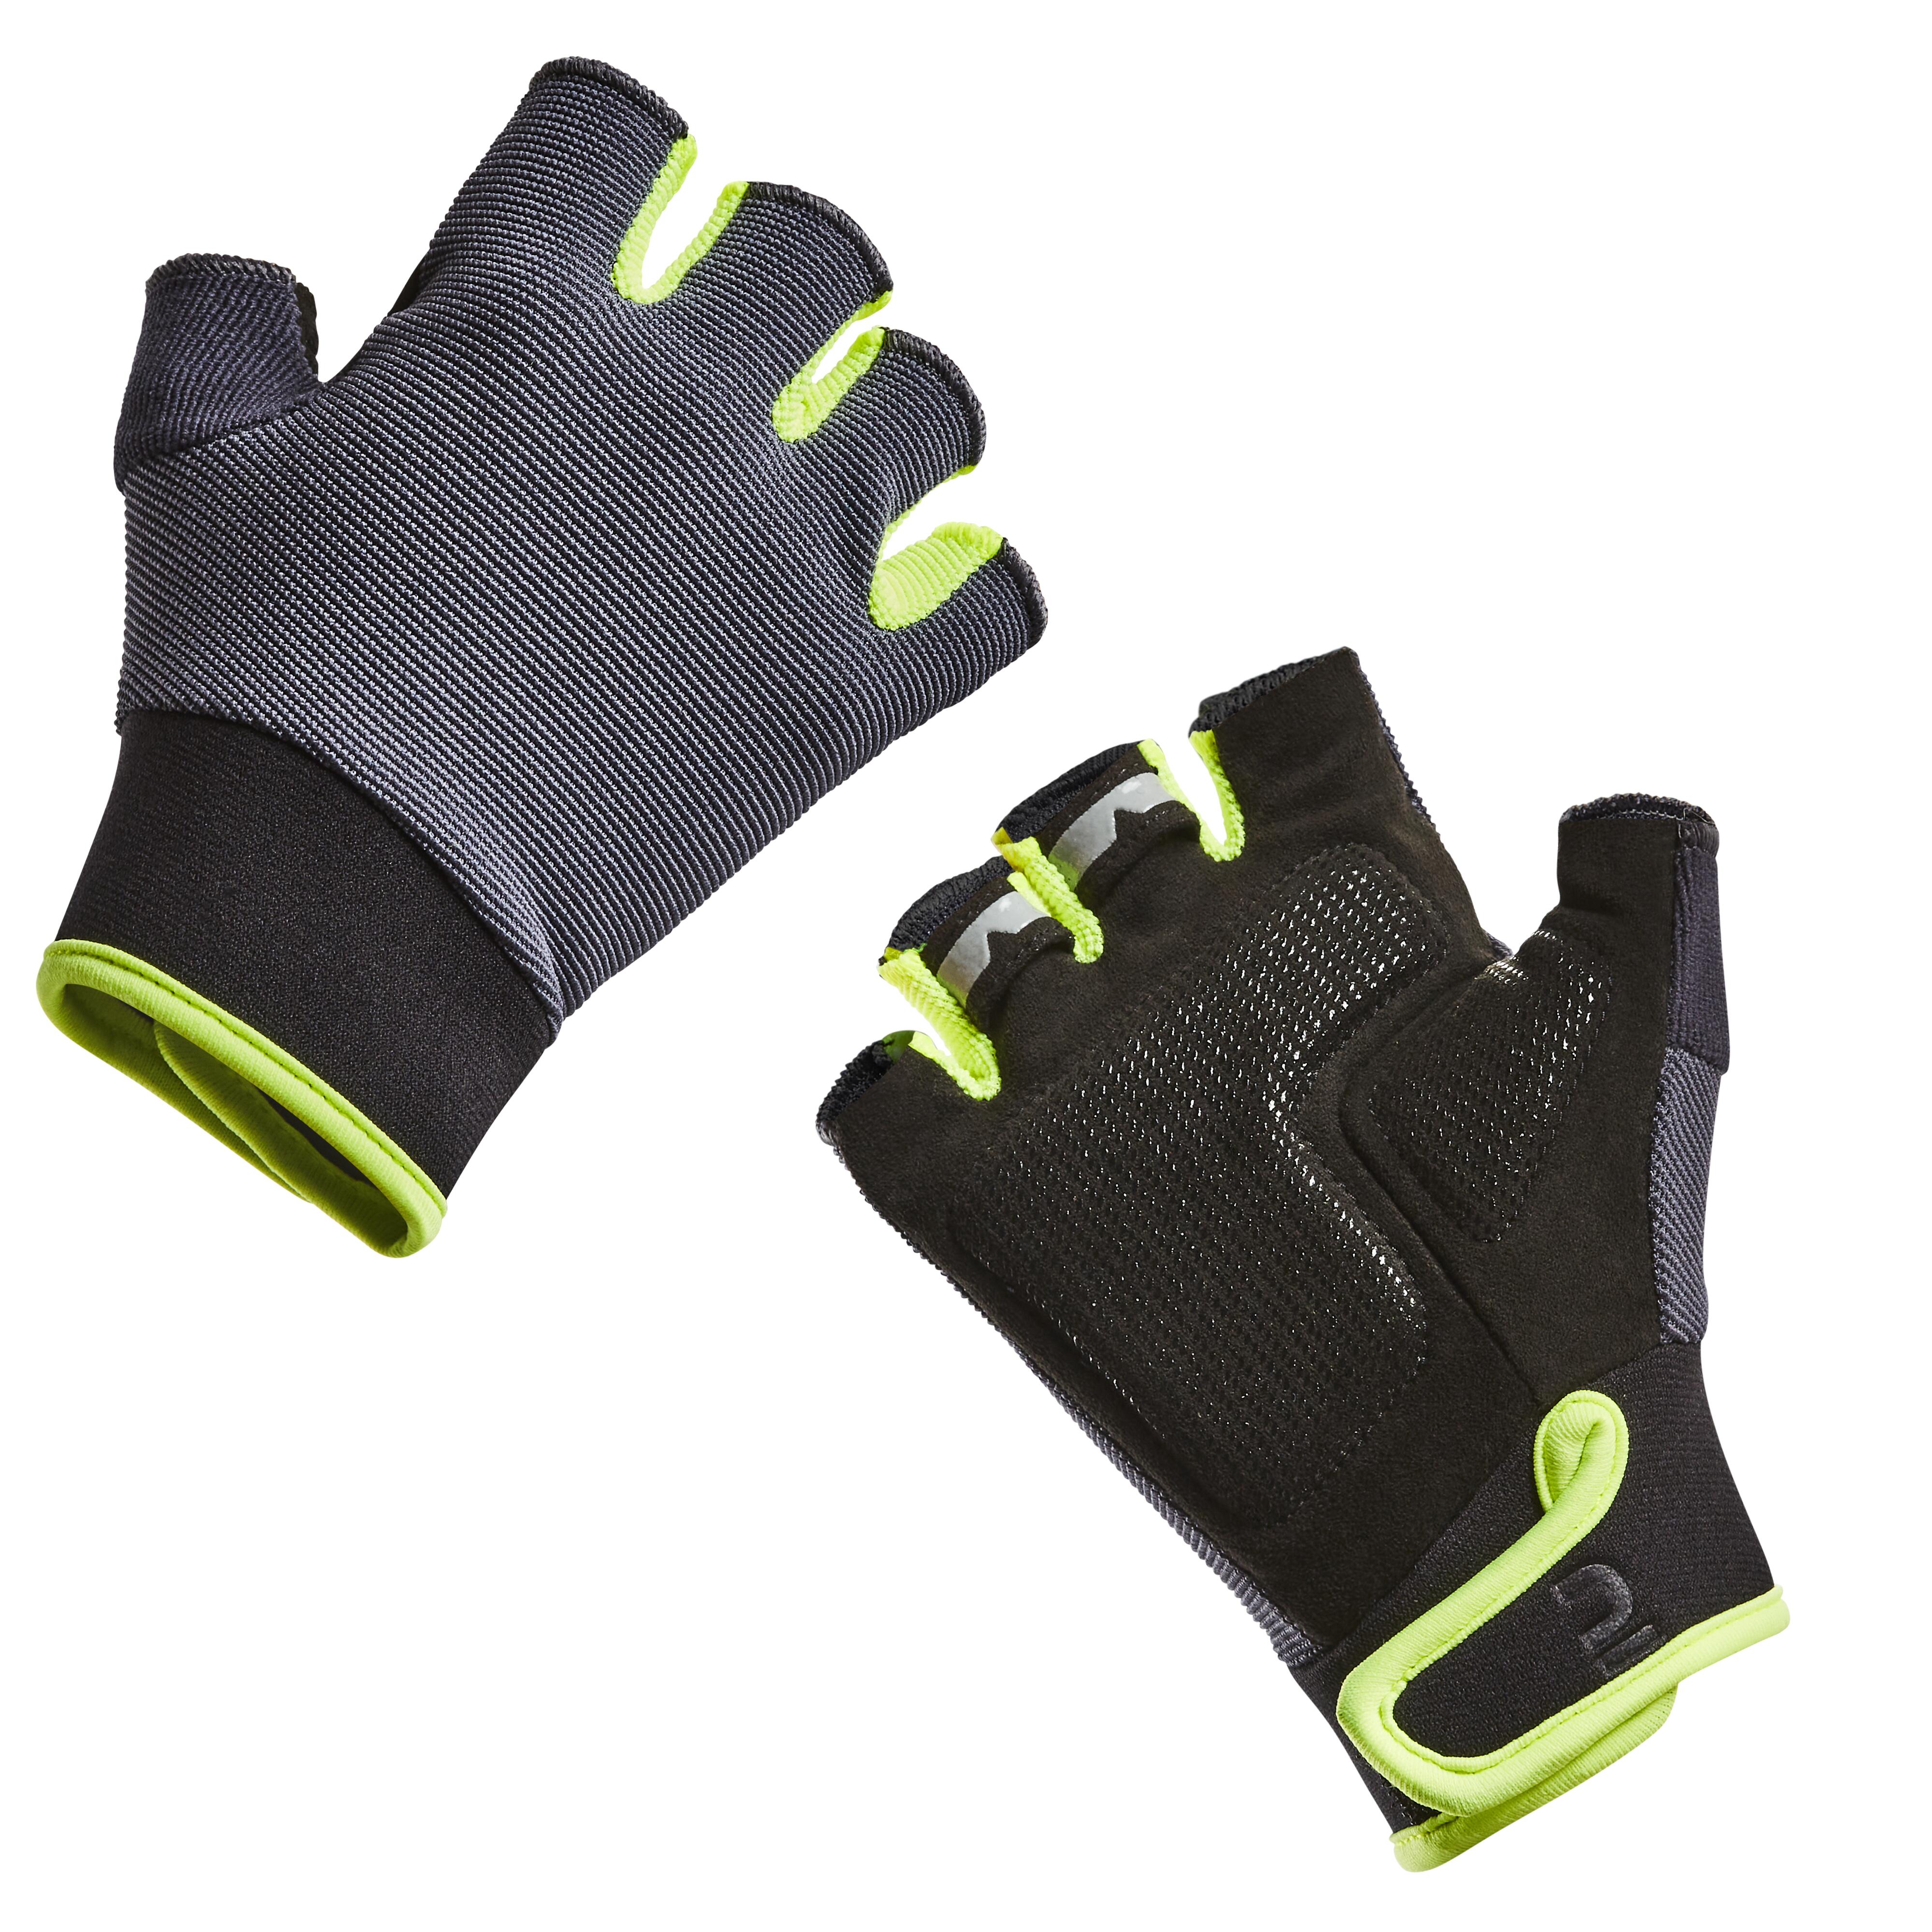 Kids' Cycling Gloves 500 - Black / Yellow